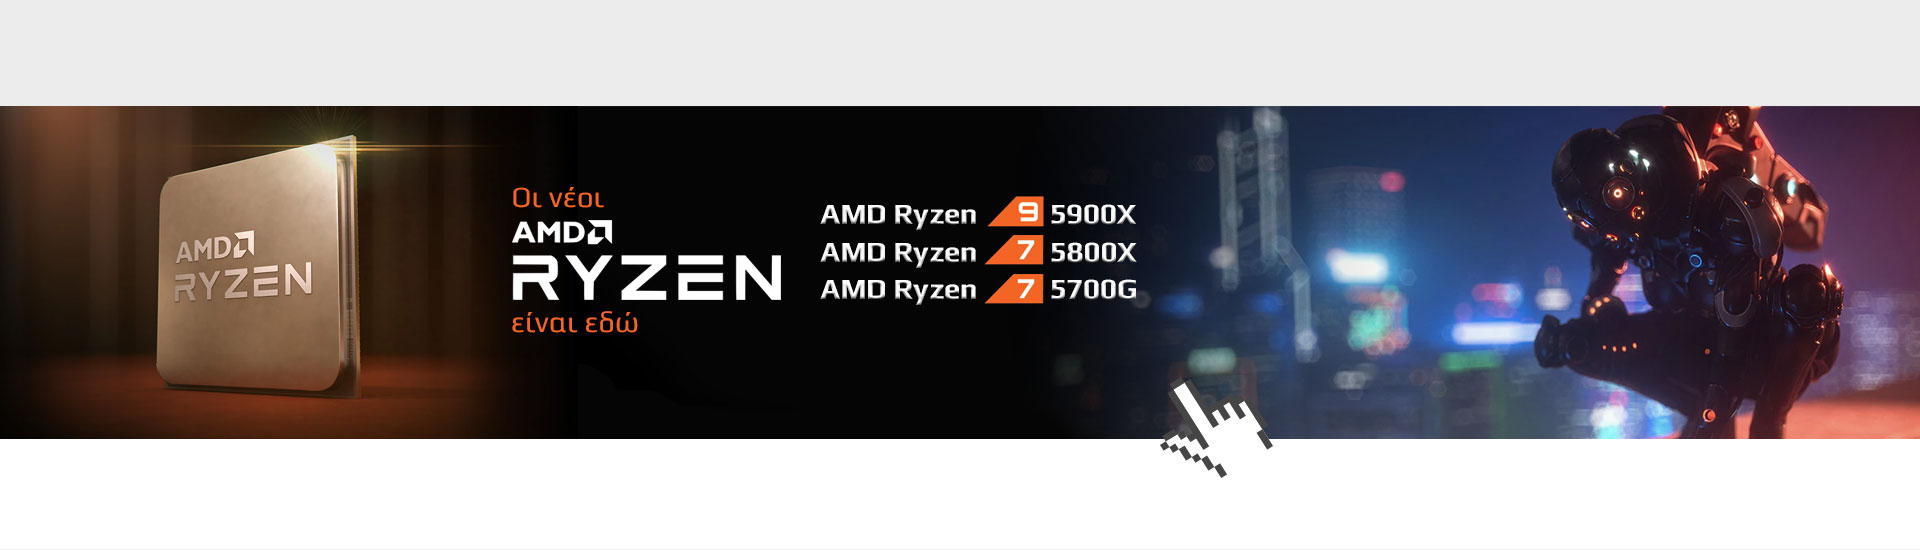 New AMD